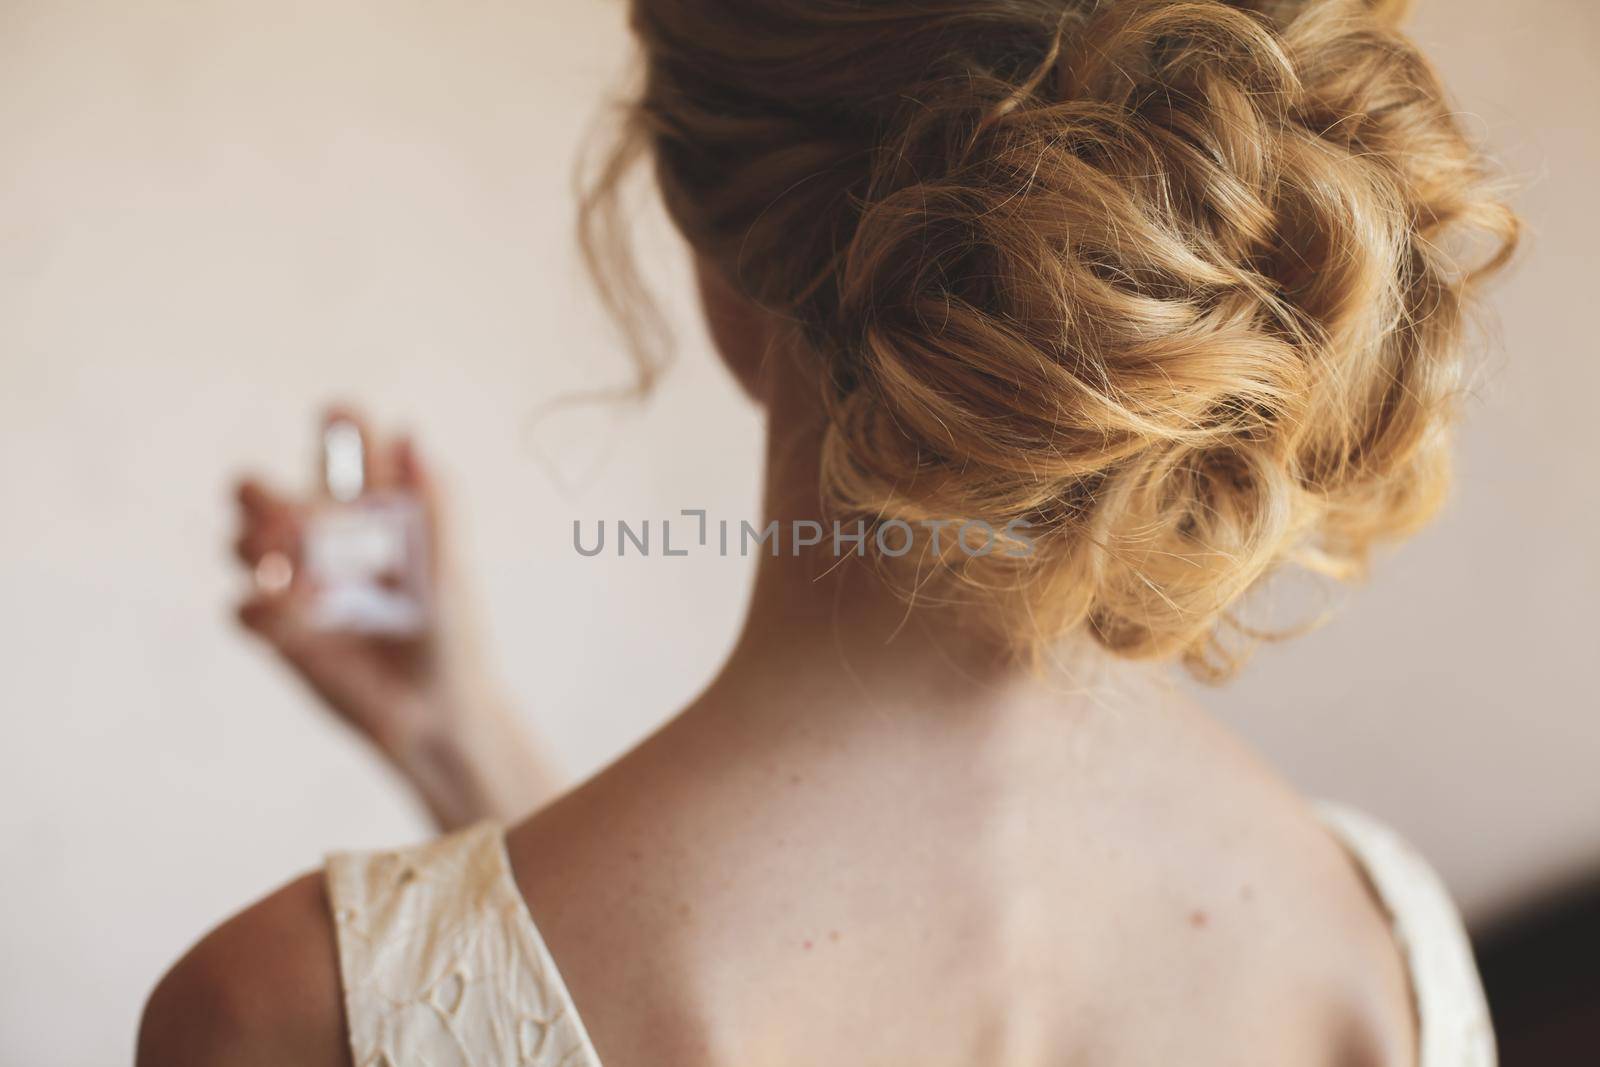 The blonde bride enjoys perfume during the wedding preparations.